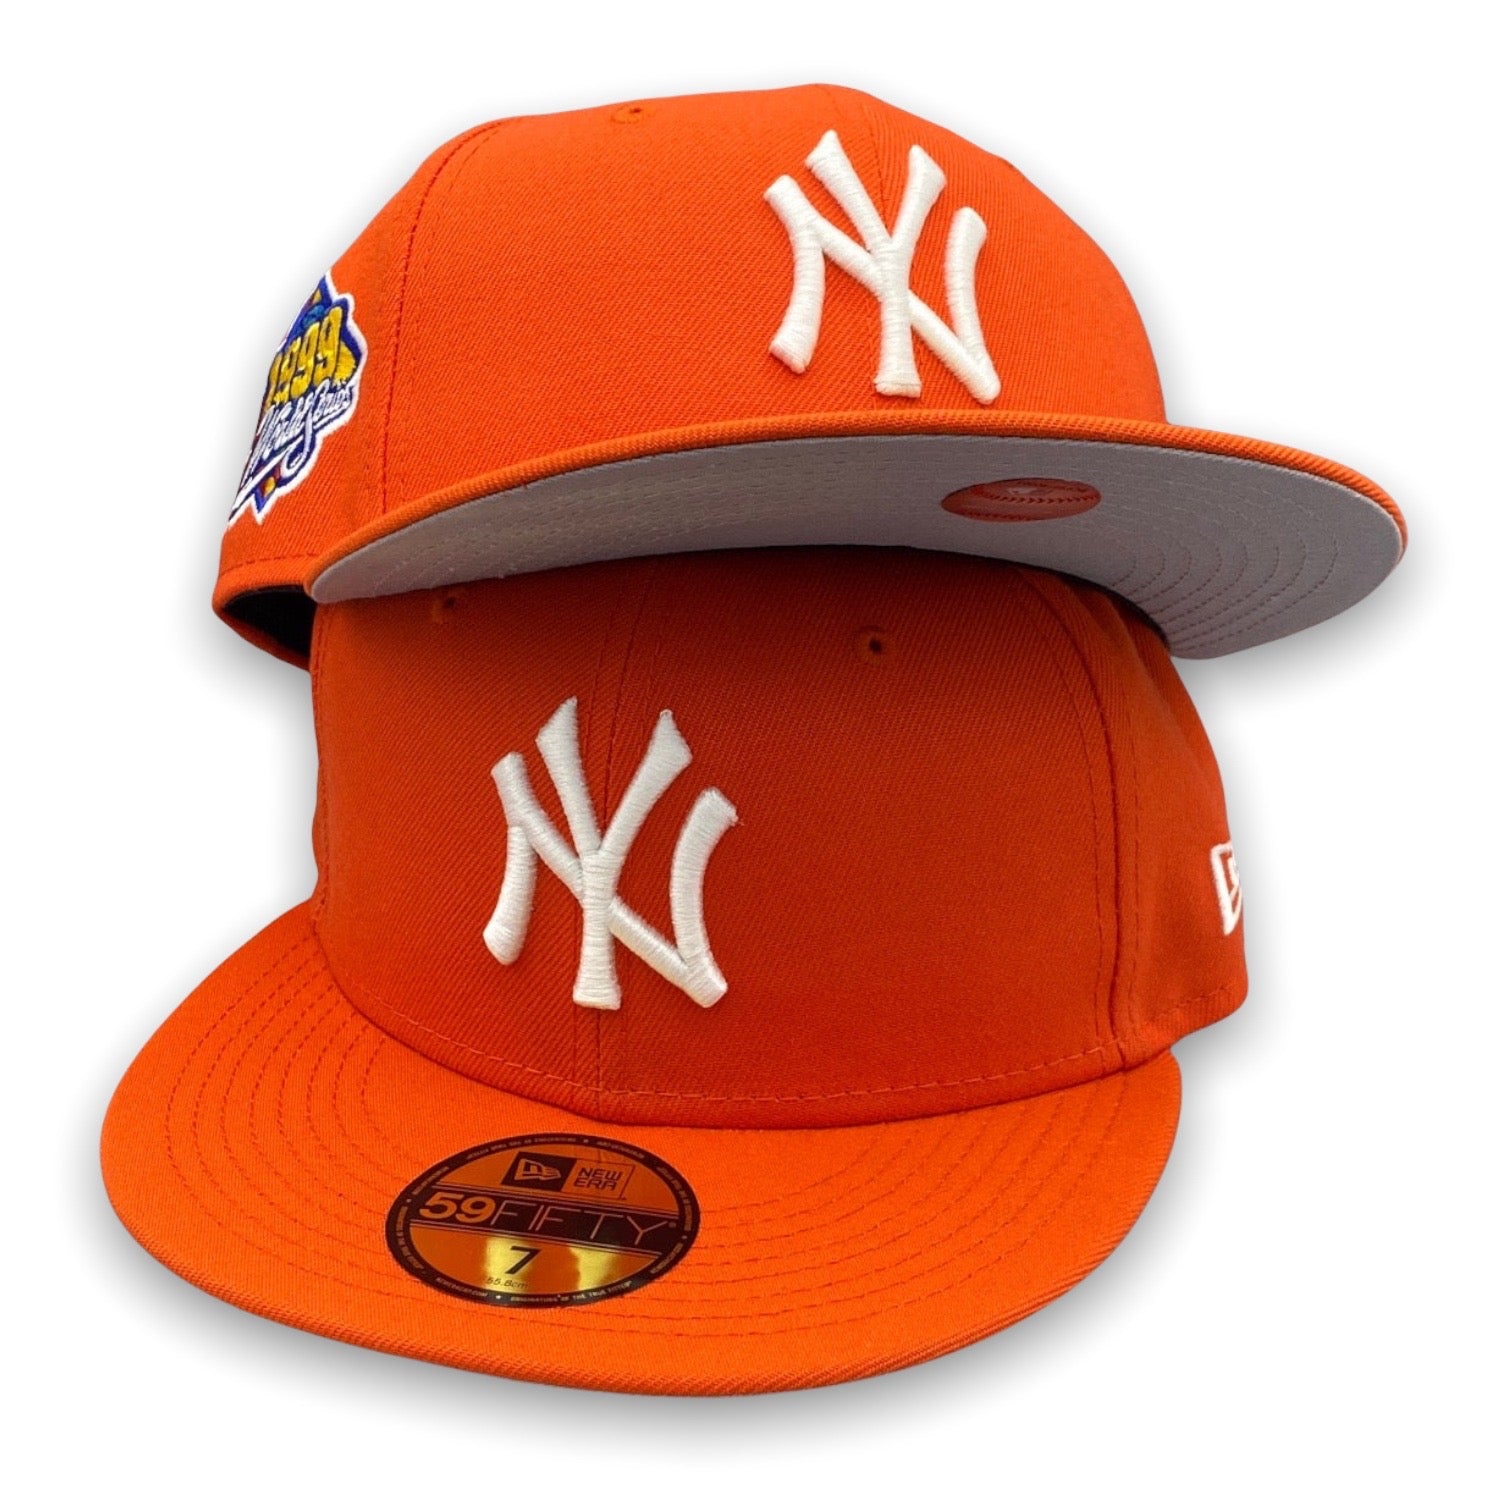 Yankees 59FIFTY Era World – NY KING Hat CAP Series Orange New 1999 USA